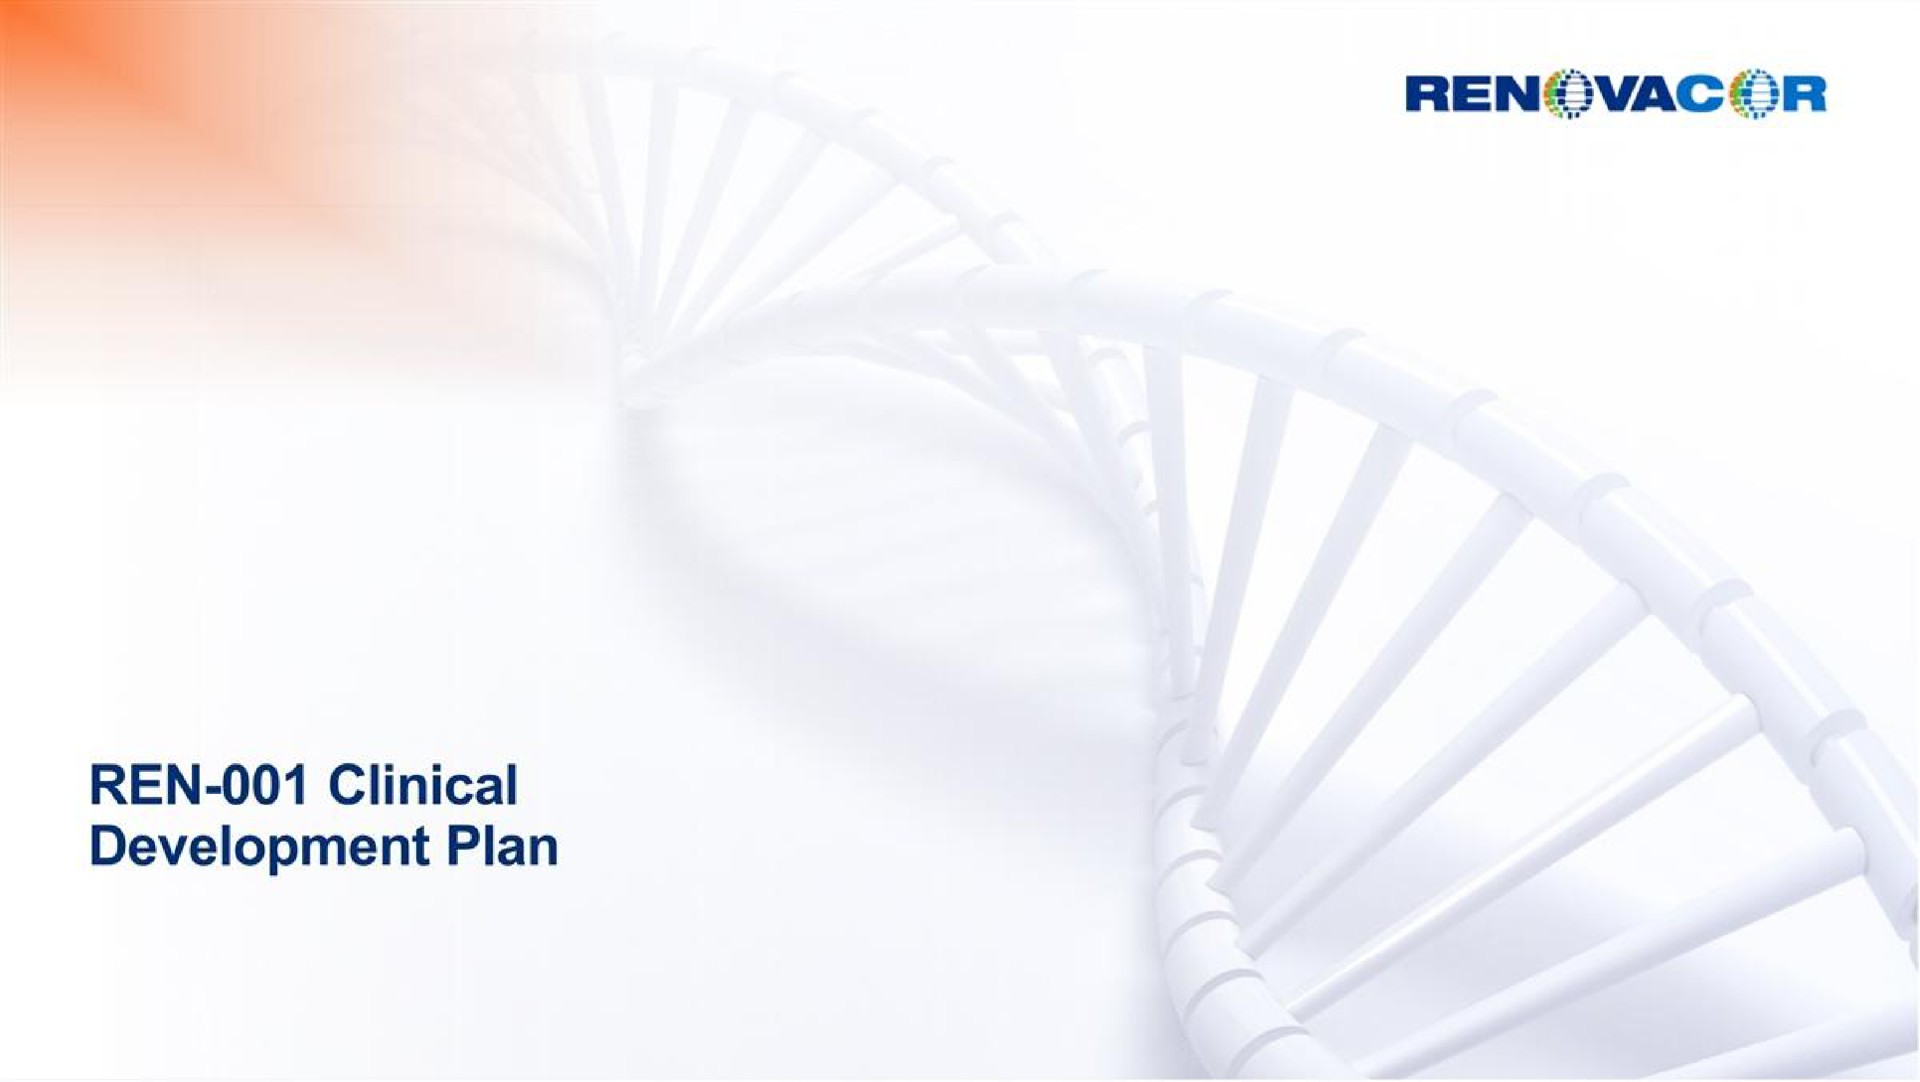 clinical development plan | Renovacor